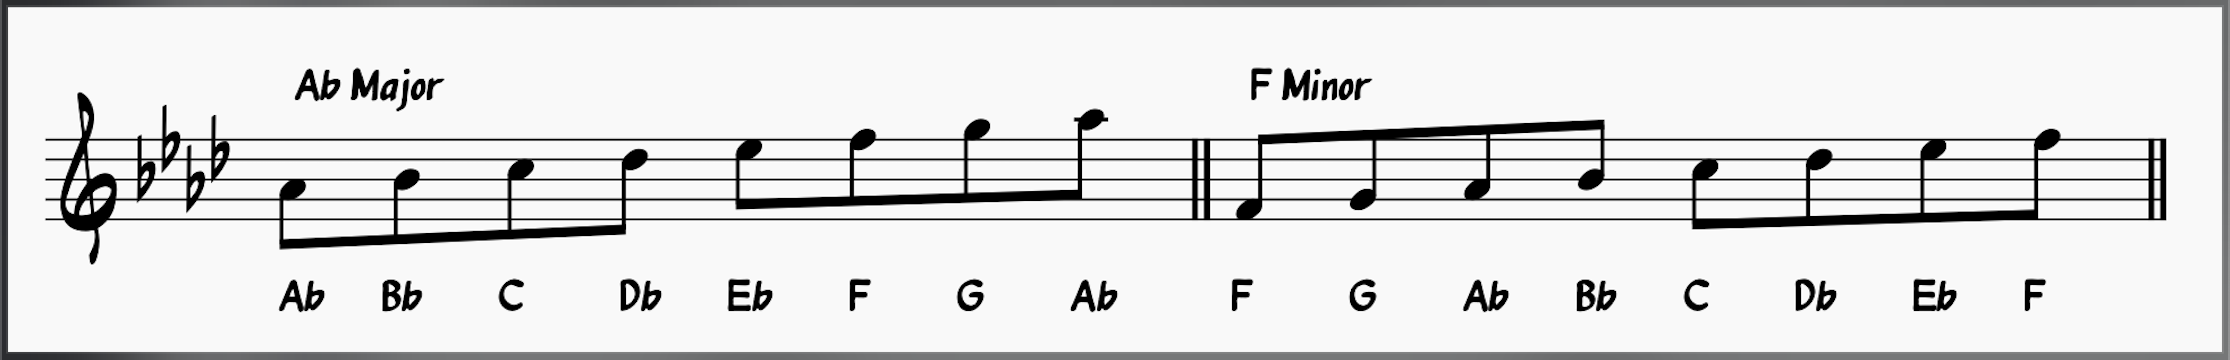 Ab Major and F minor